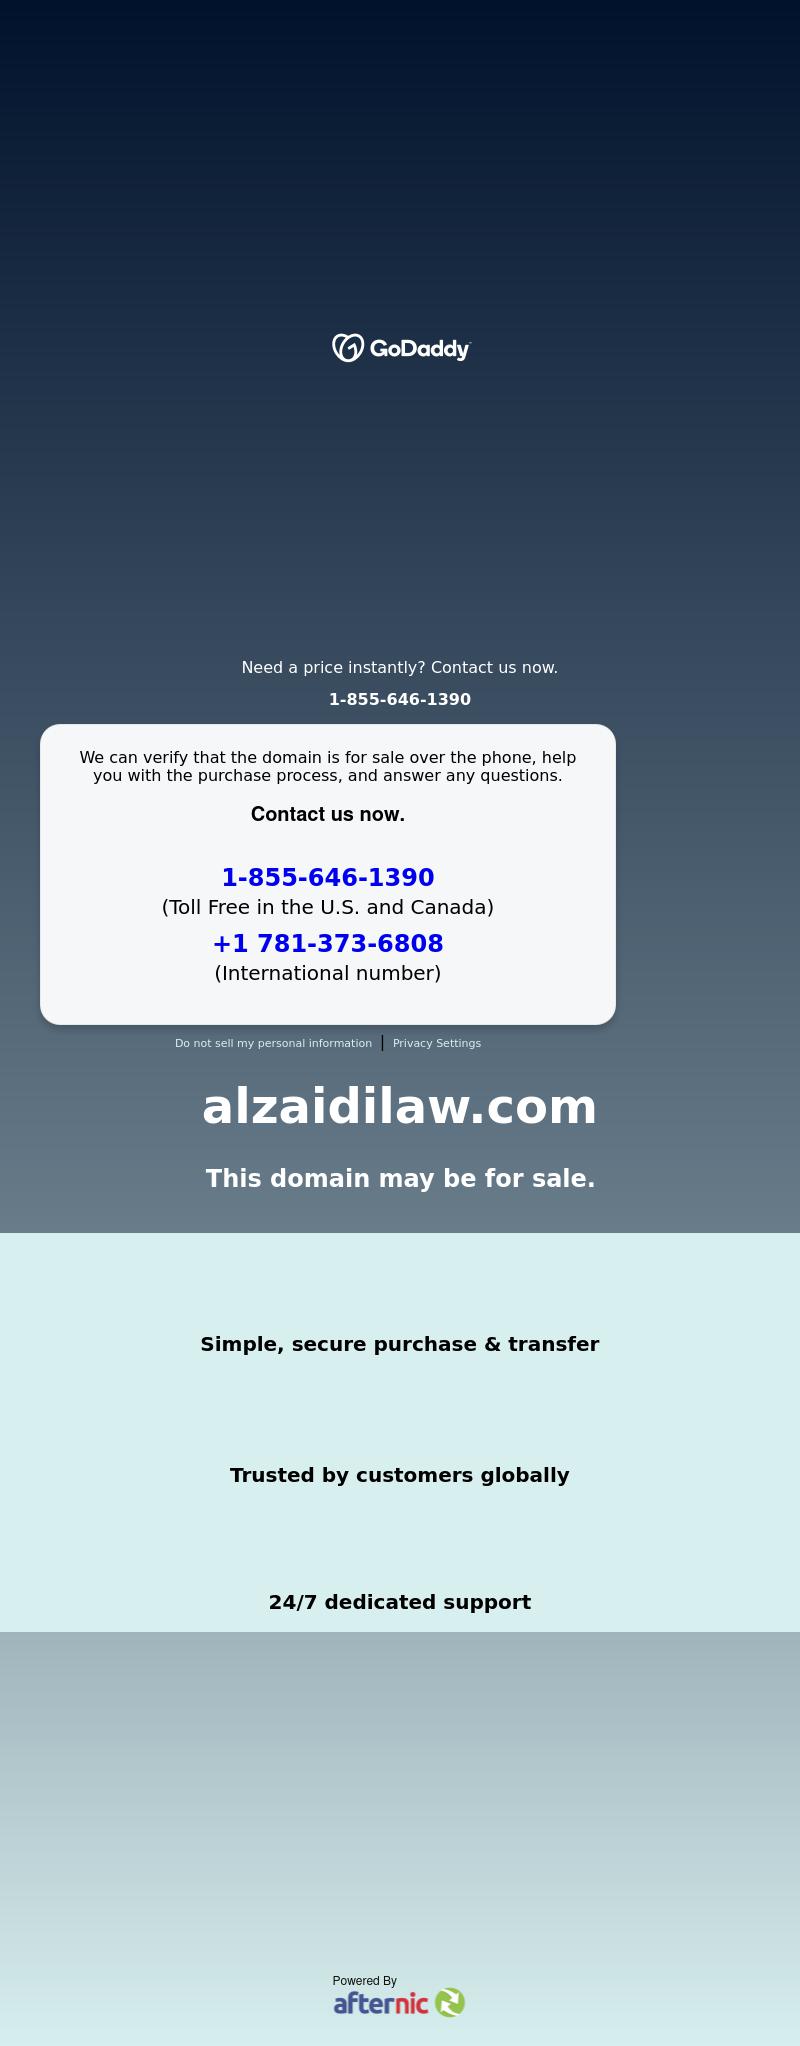 Mohammed Alzaidi Law Firm - Phoenix AZ Lawyers